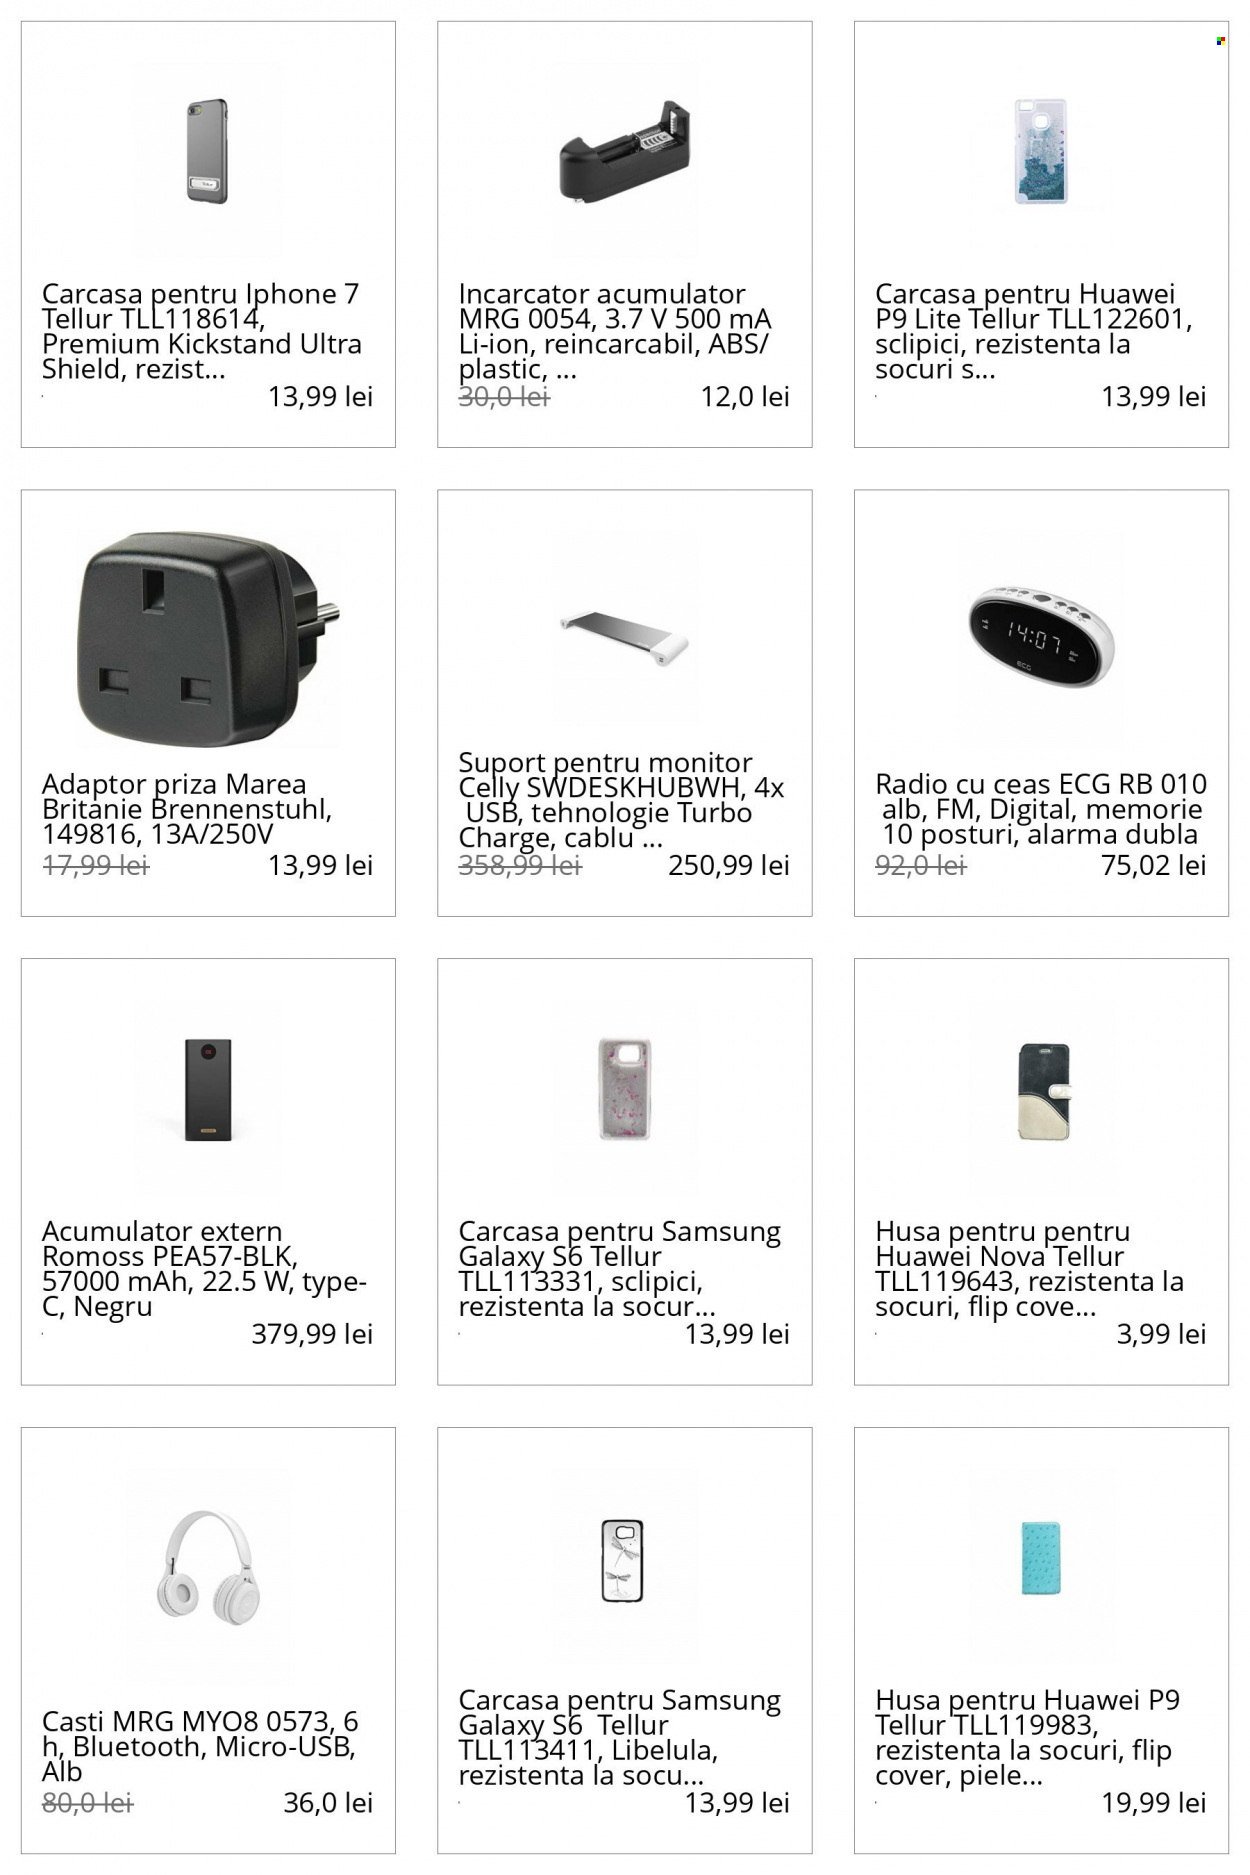 thumbnail - Cataloage elefant.ro - Produse în vânzare - Samsung, monitor, Huawei, iPhone, iPhone 7, căşti, incarcator. Pagina 18.